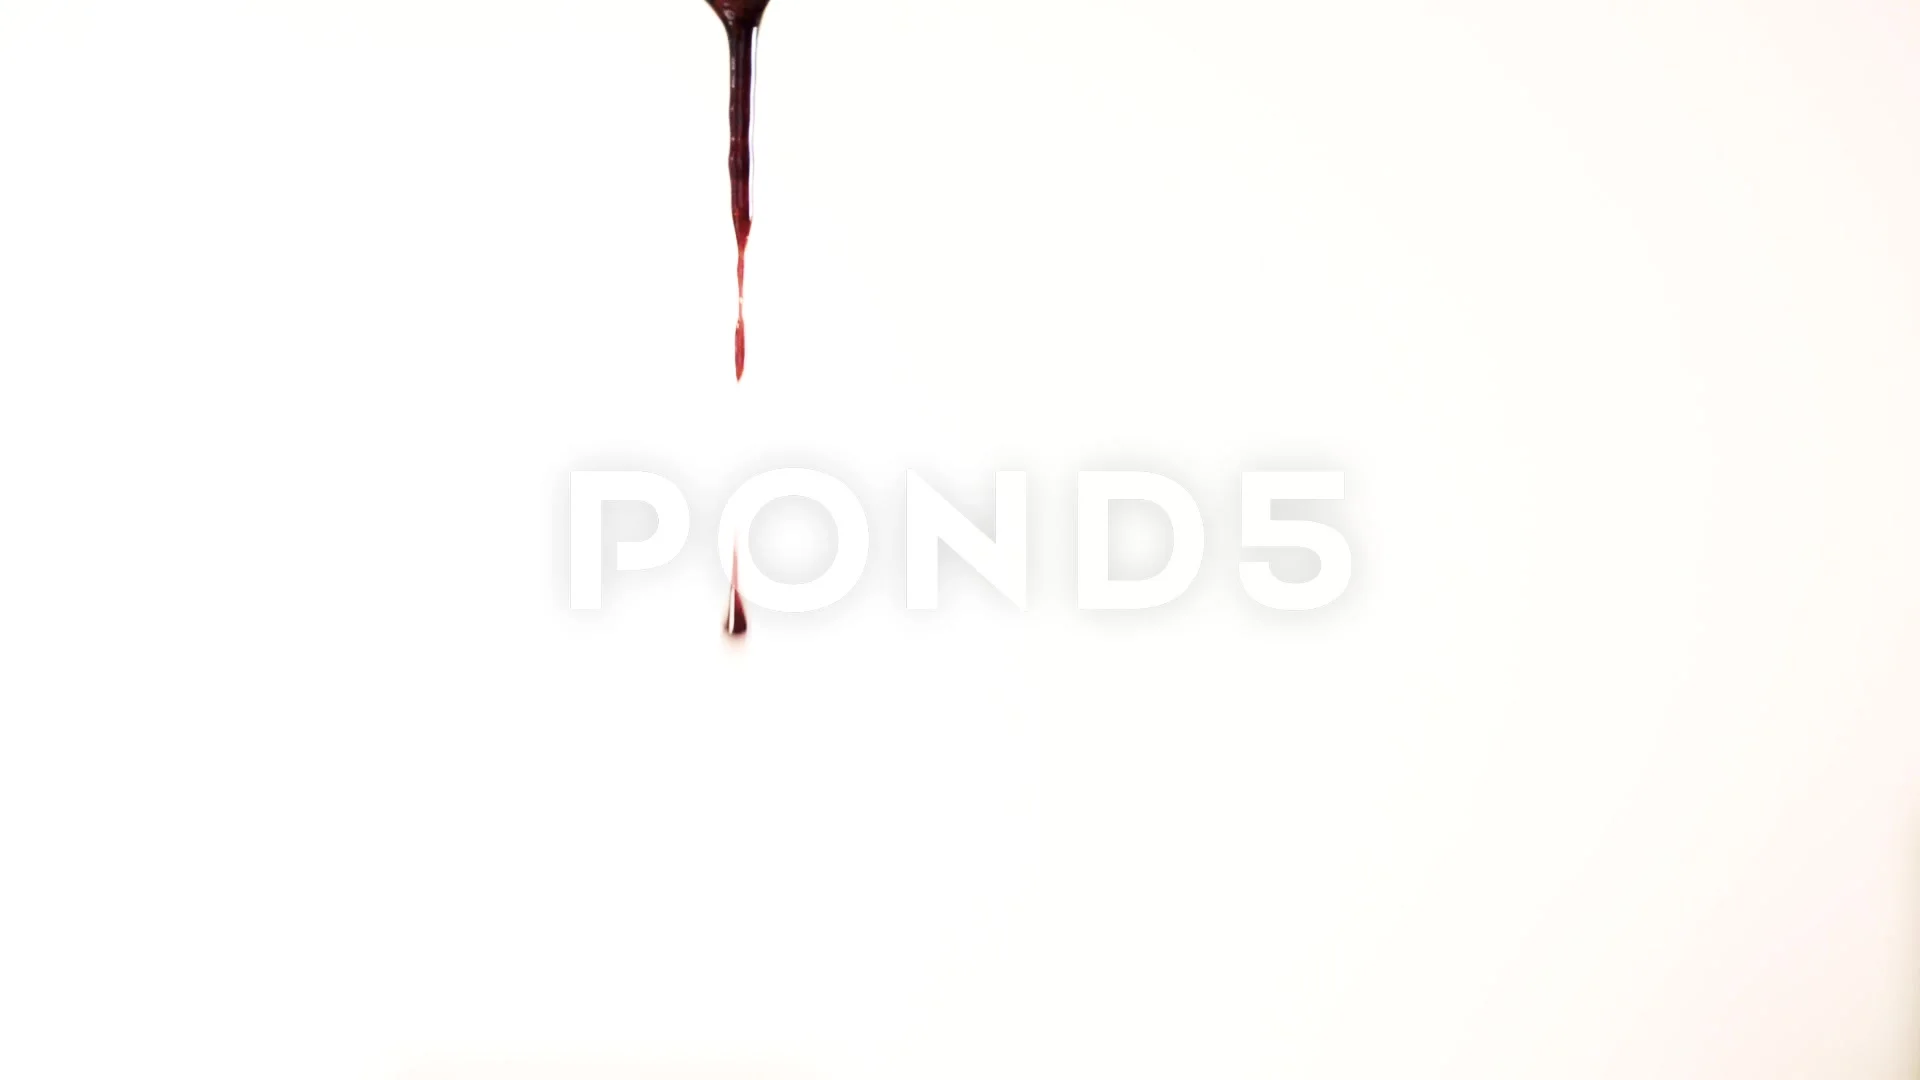 dripping blood photoshop